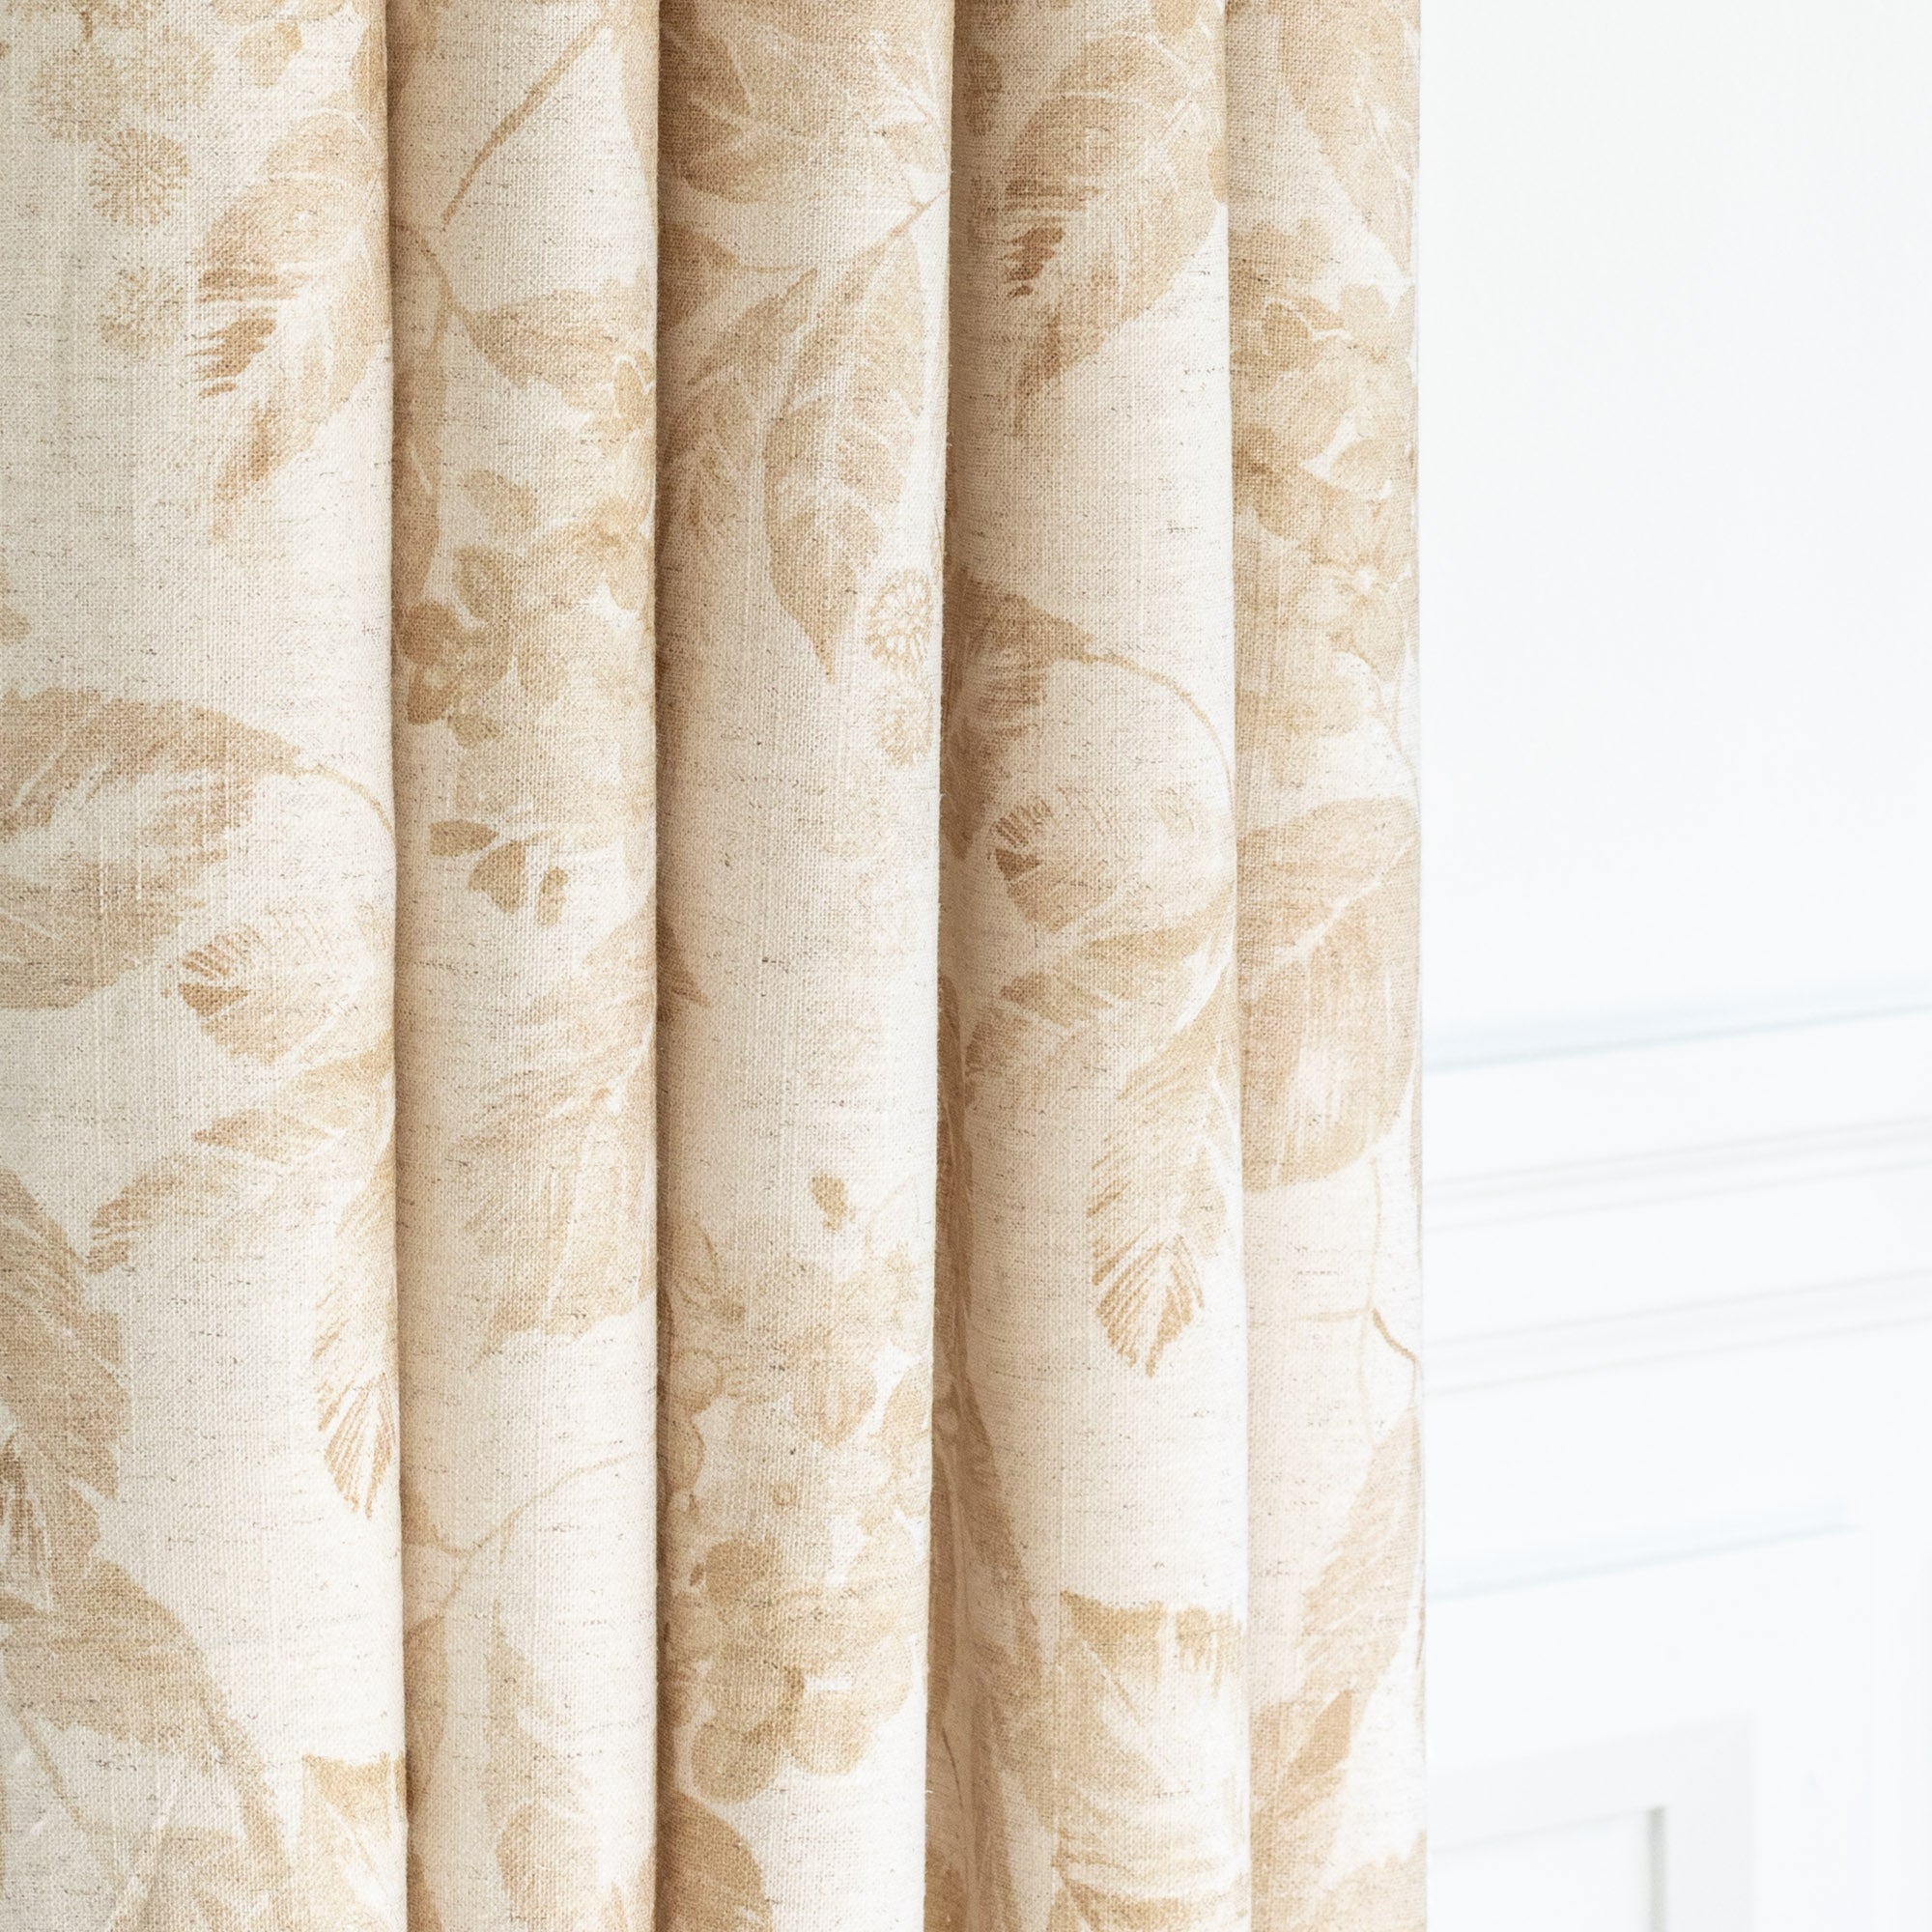 a tonal oatmeal cream and soft ochre brown floral print curtain fabric